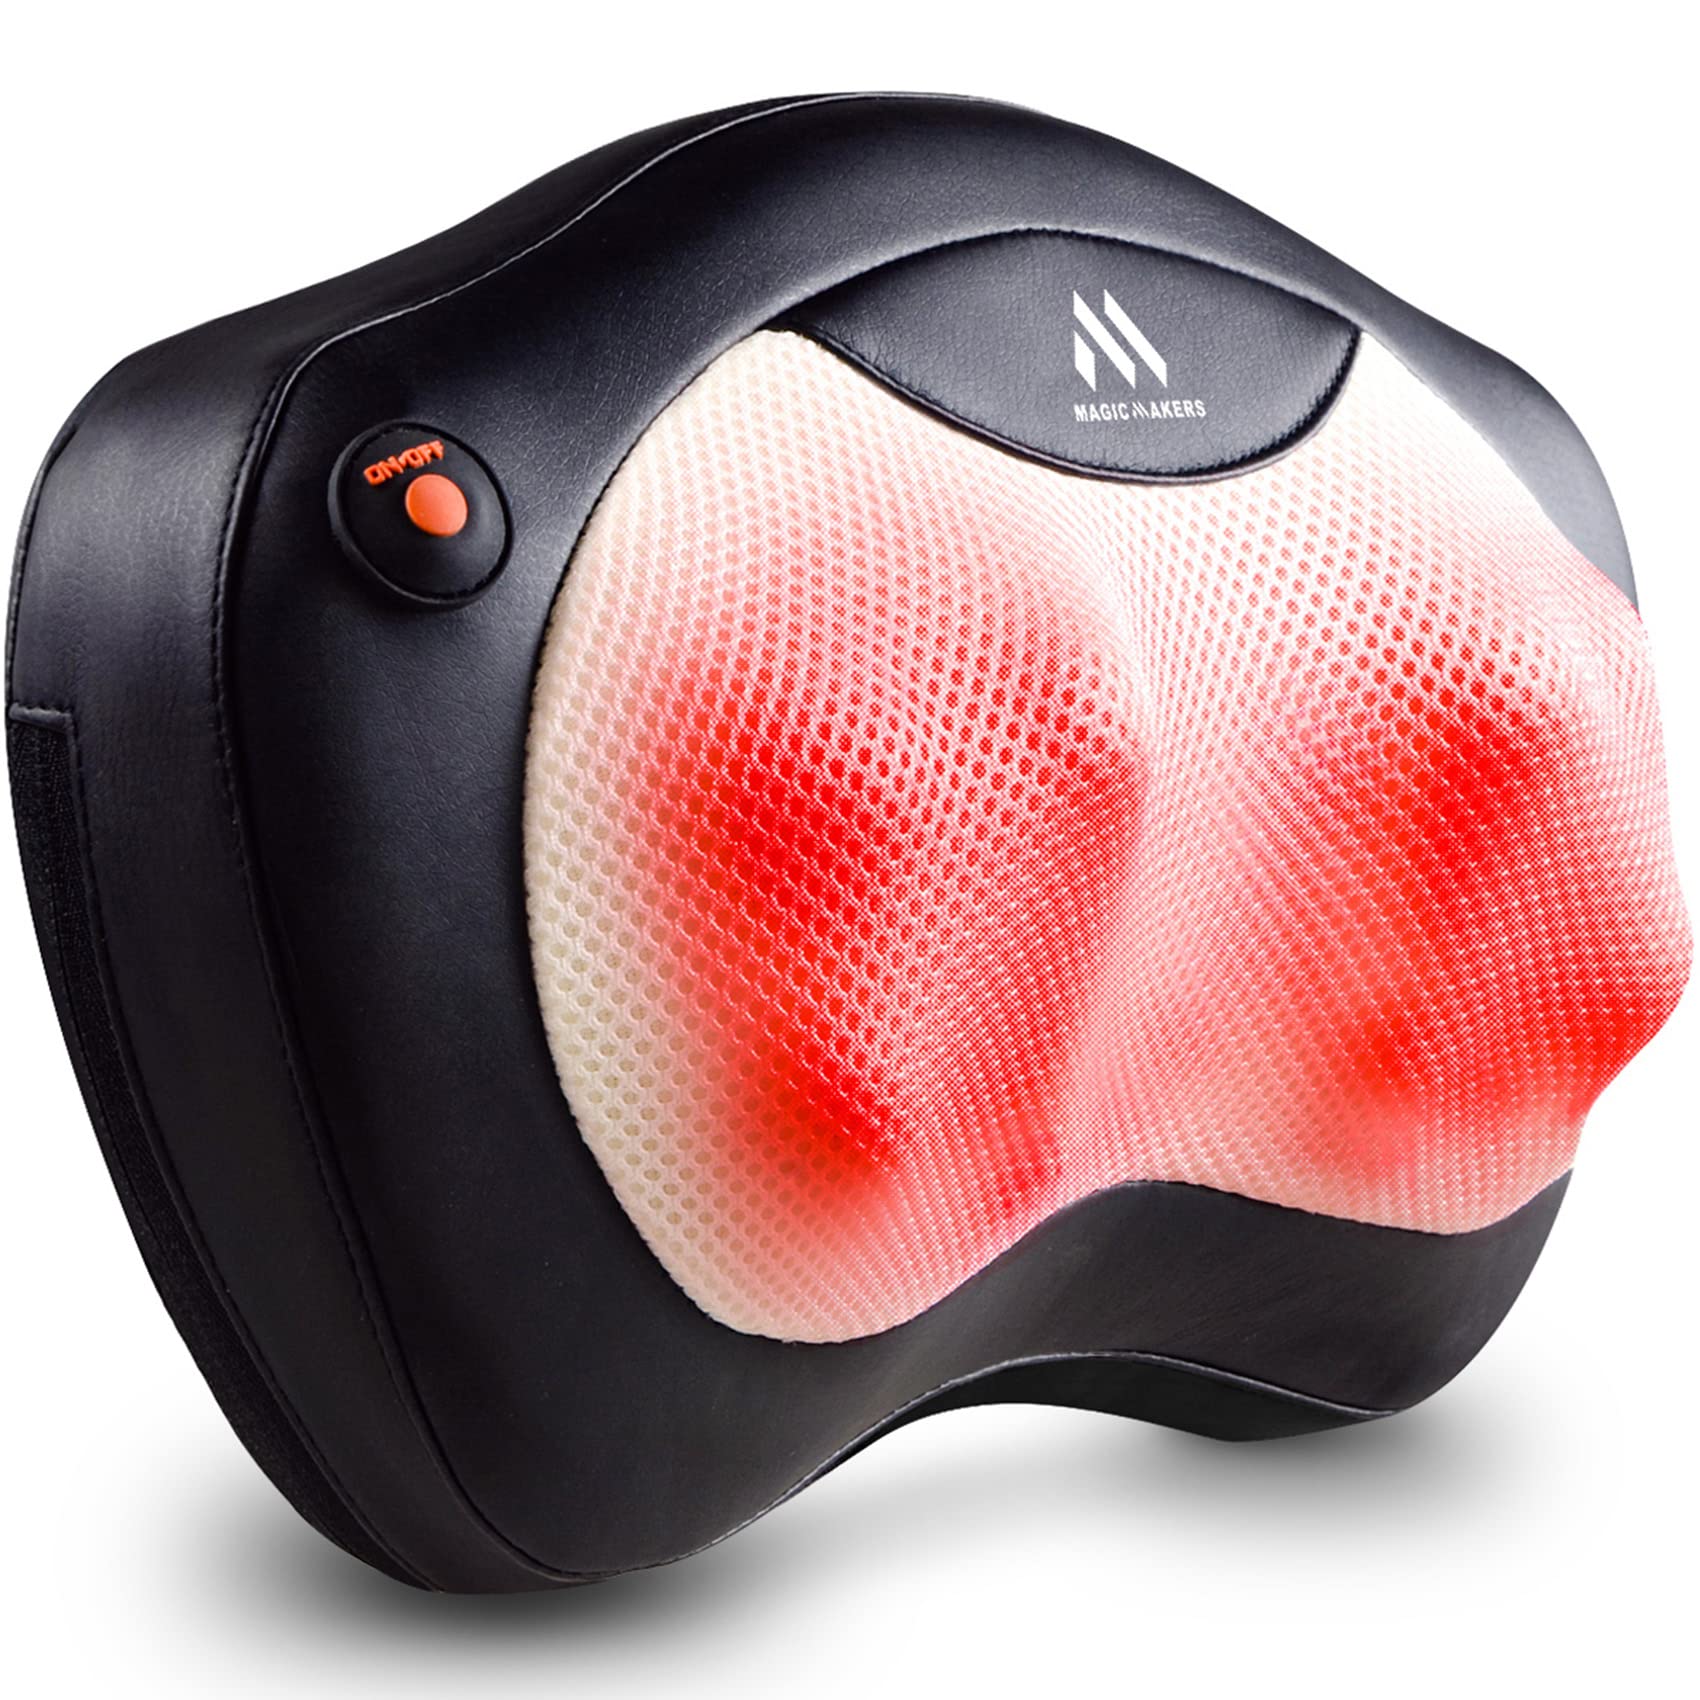 Shiatsu Neck and Back Massager - 8 Heated Rollers Kneading Massage